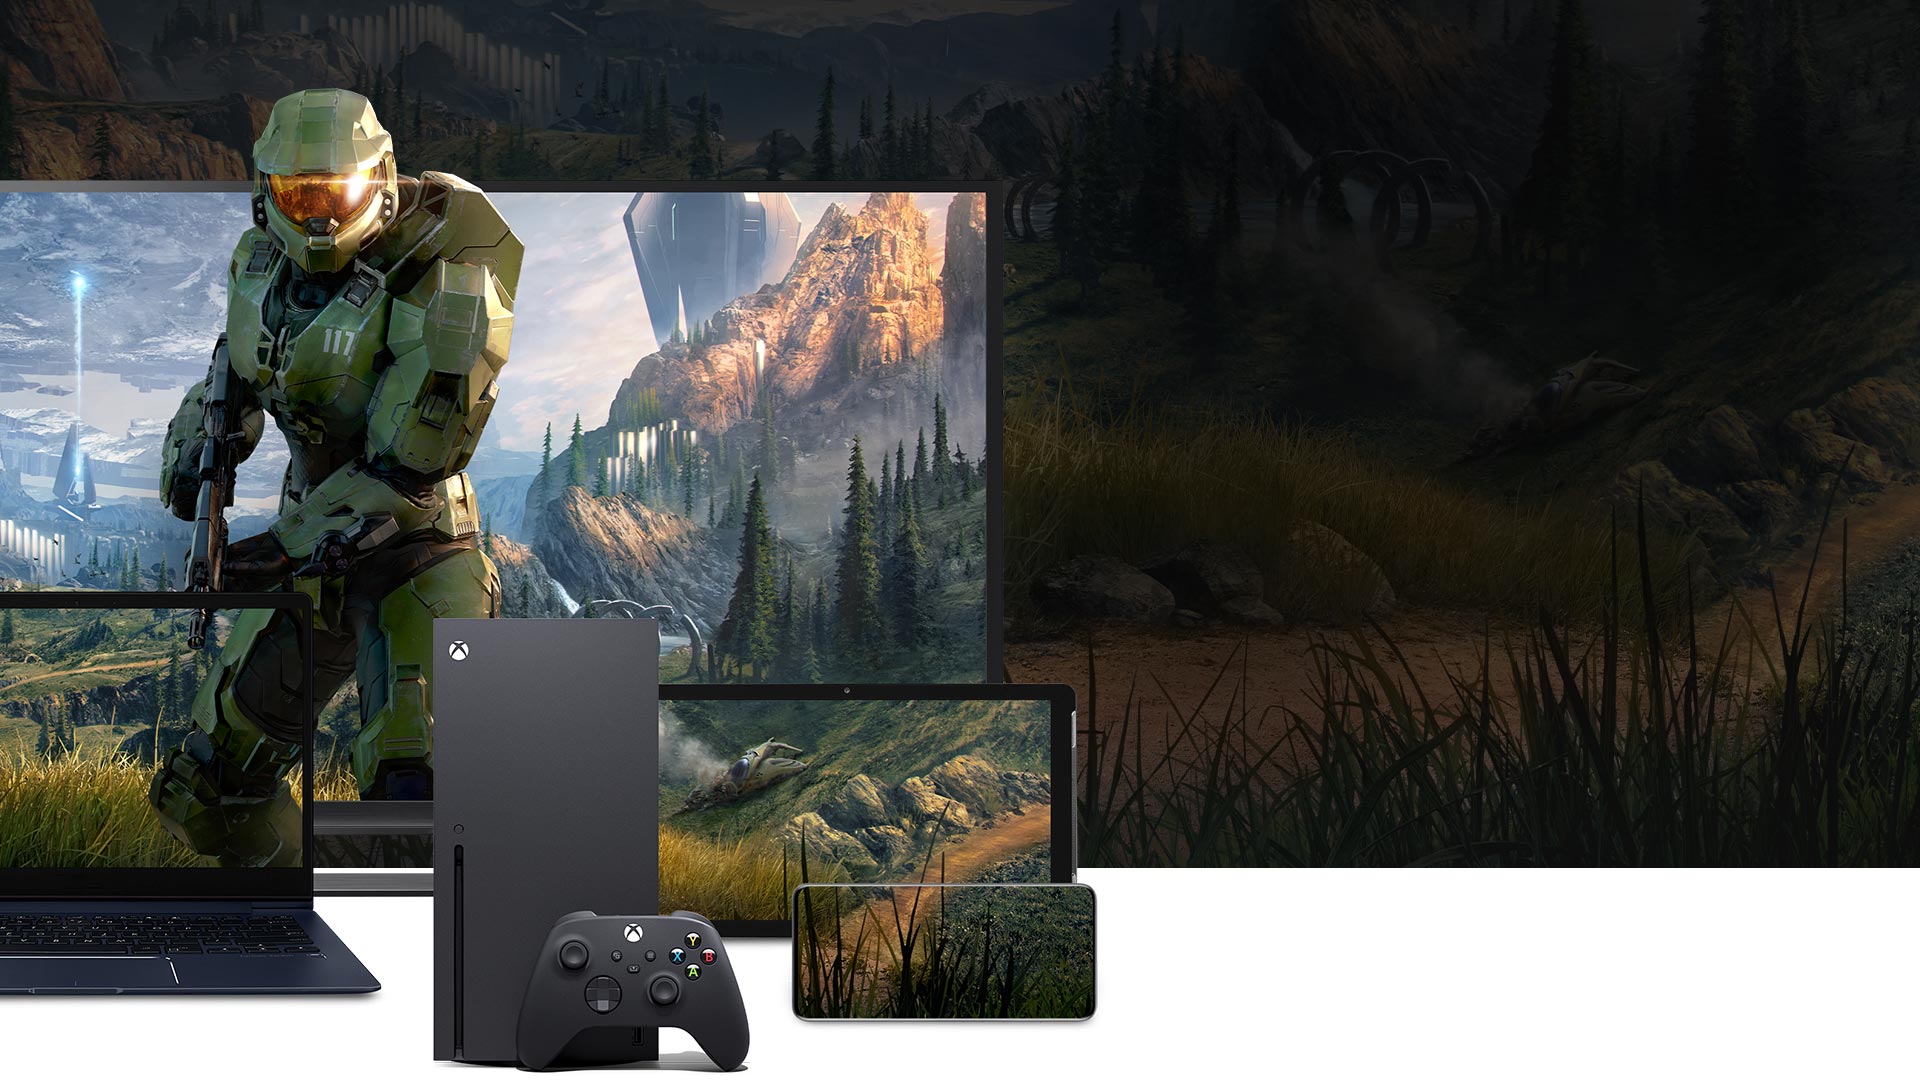 Konzole Xbox Series X s počítačem, tabletem a telefonem s vyobrazením Master Chiefa ze hry Halo Infinite.